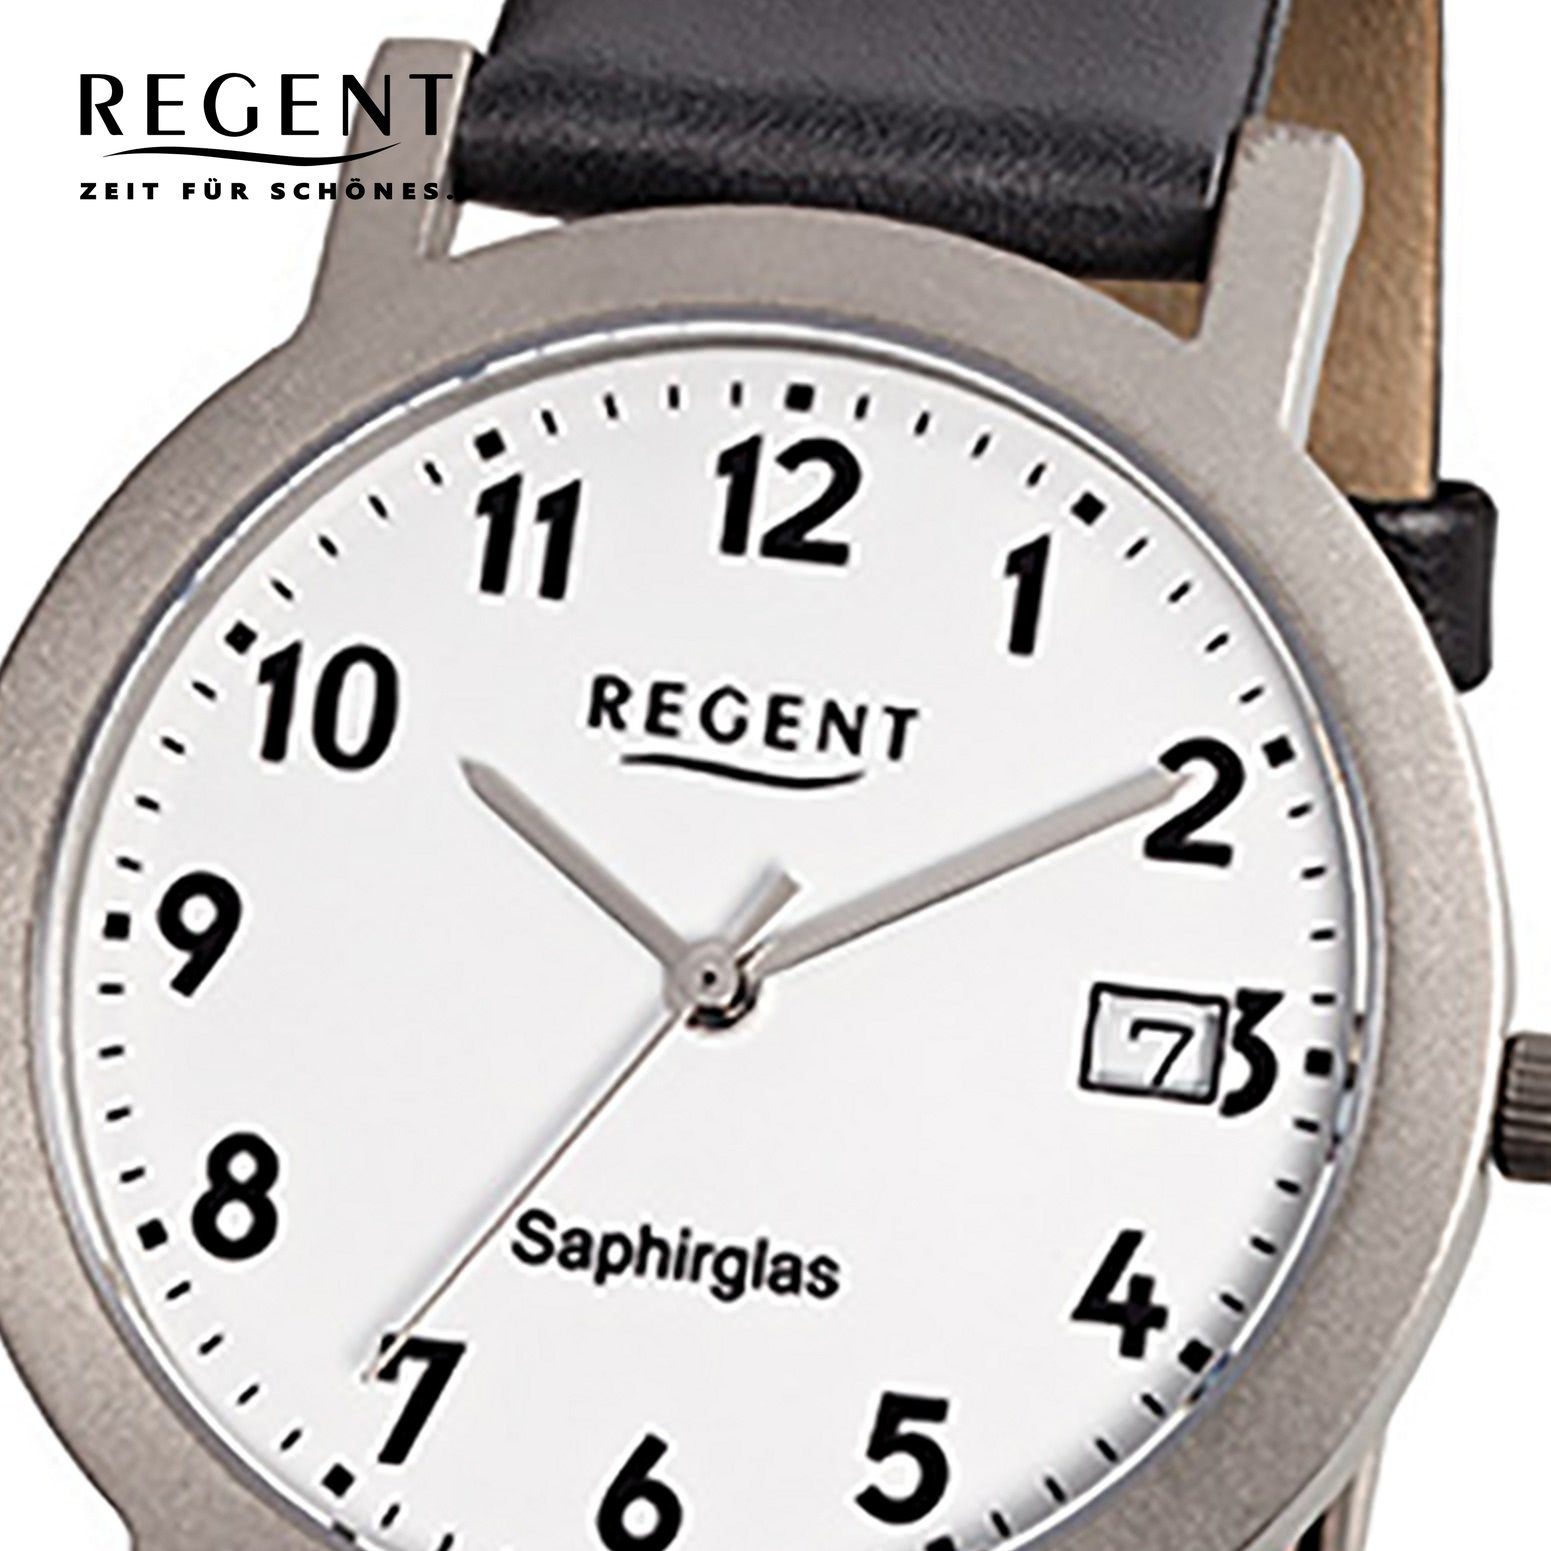 Regent Quarzuhr Regent Herren-Armbanduhr schwarz Herren Analog, rund, mittel 37mm), Armbanduhr (ca. Lederarmband